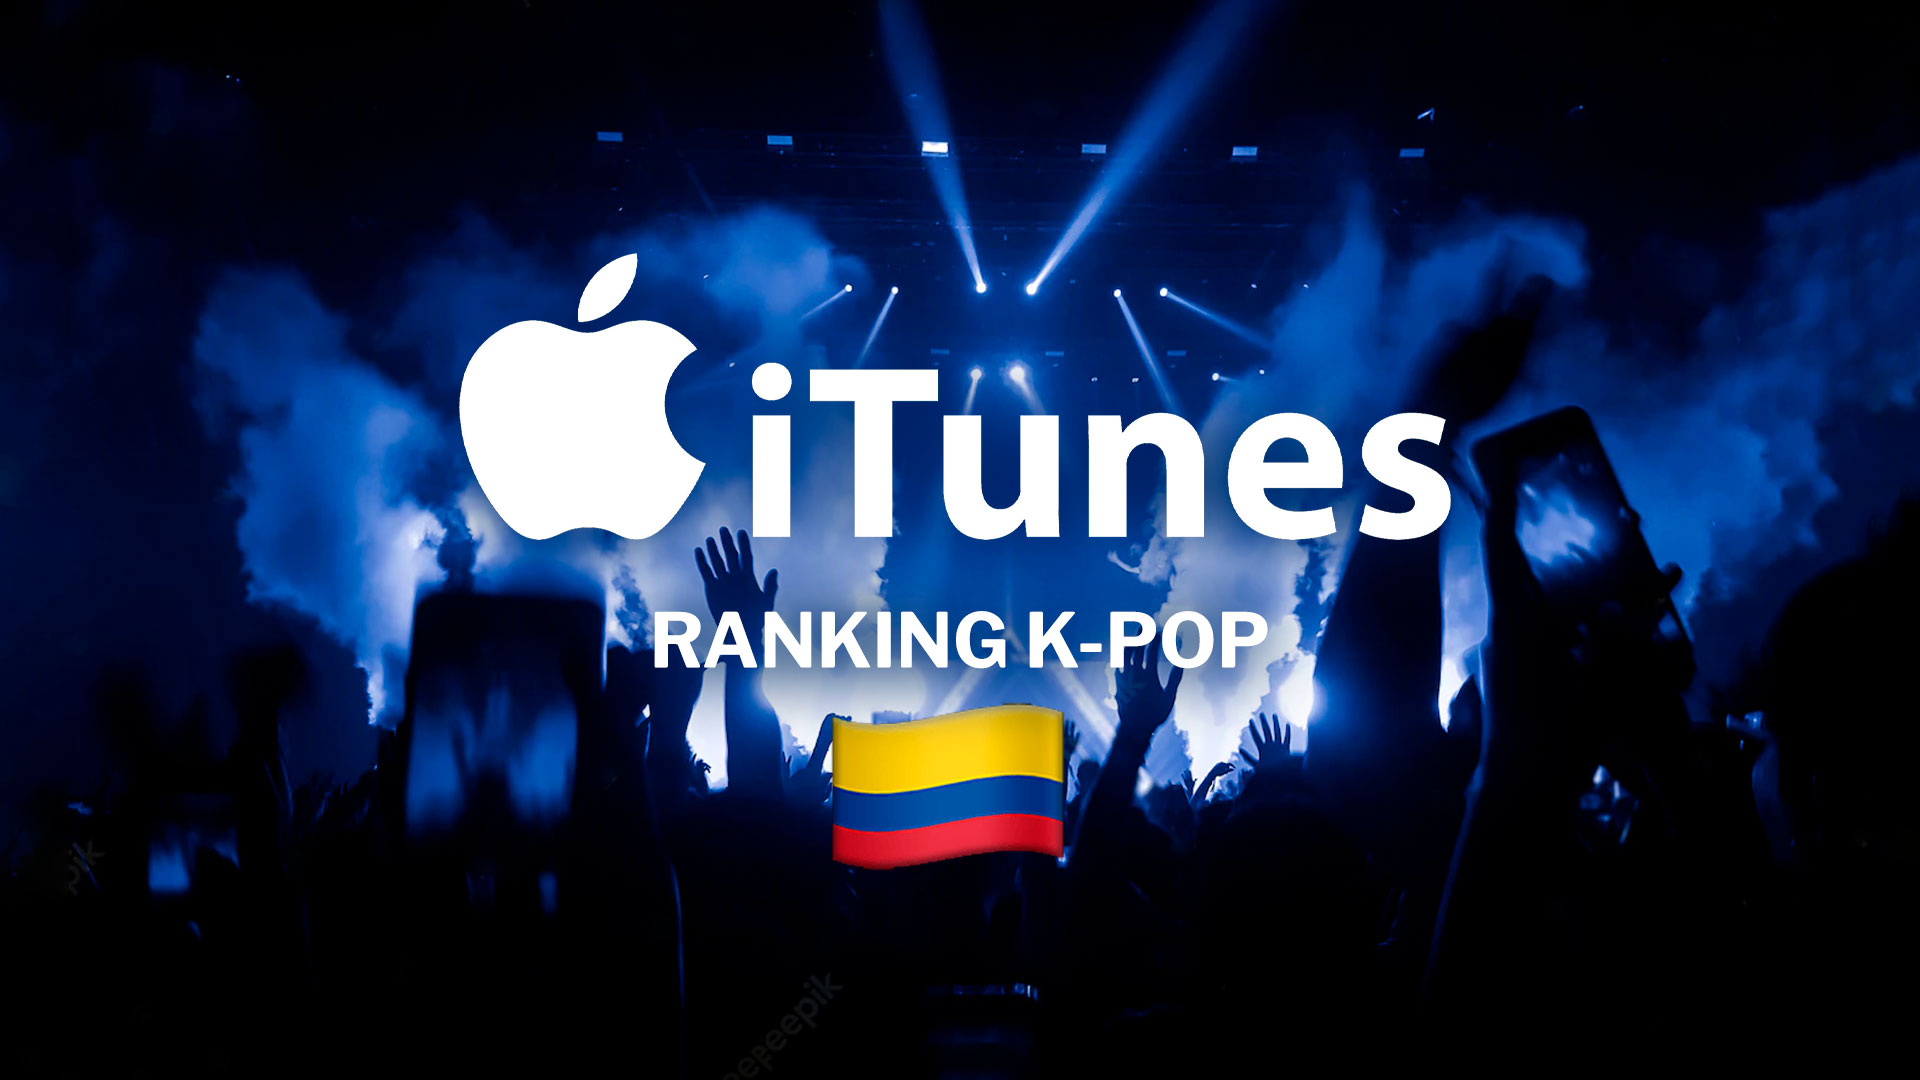 La nostalgia de BTS invade el ranking de K-pop de iTunes Colombia